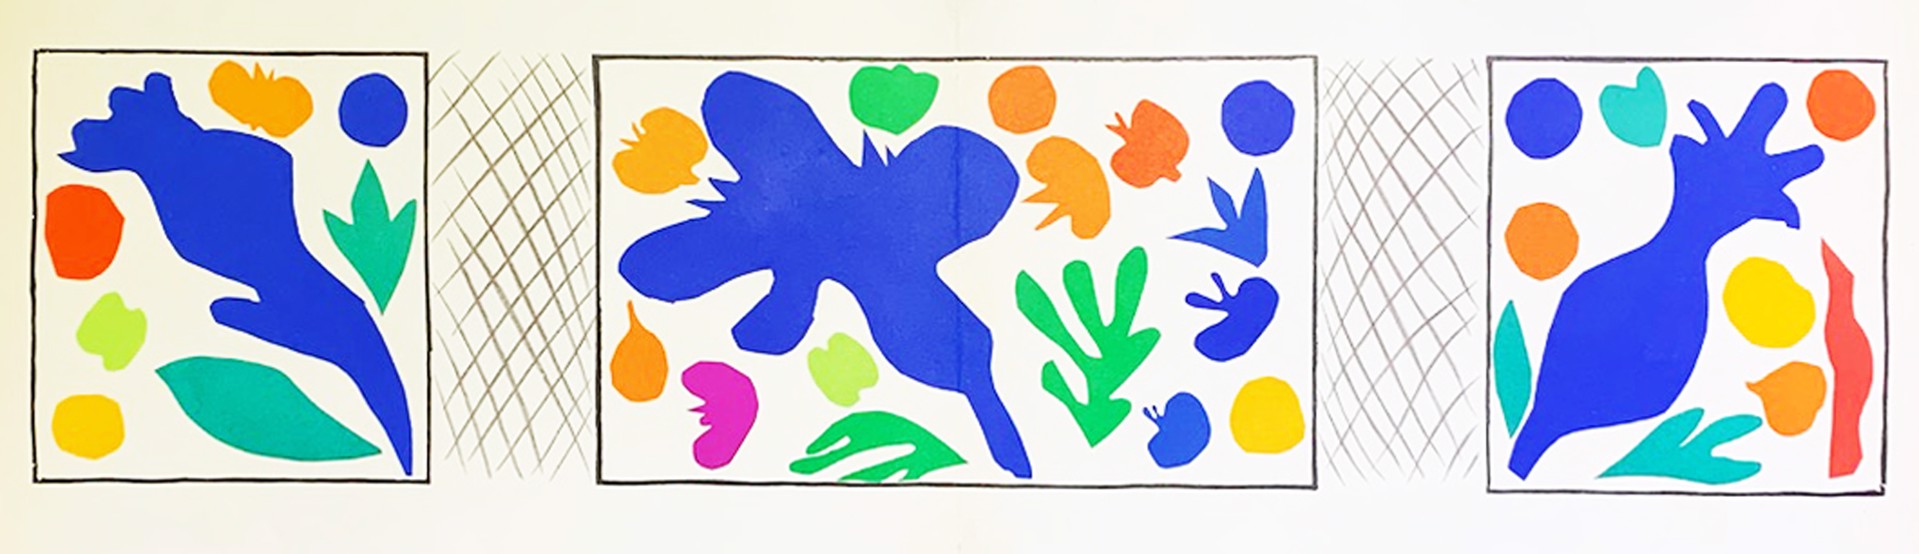 Coquelicots by Henri Matisse (1869 - 1954)